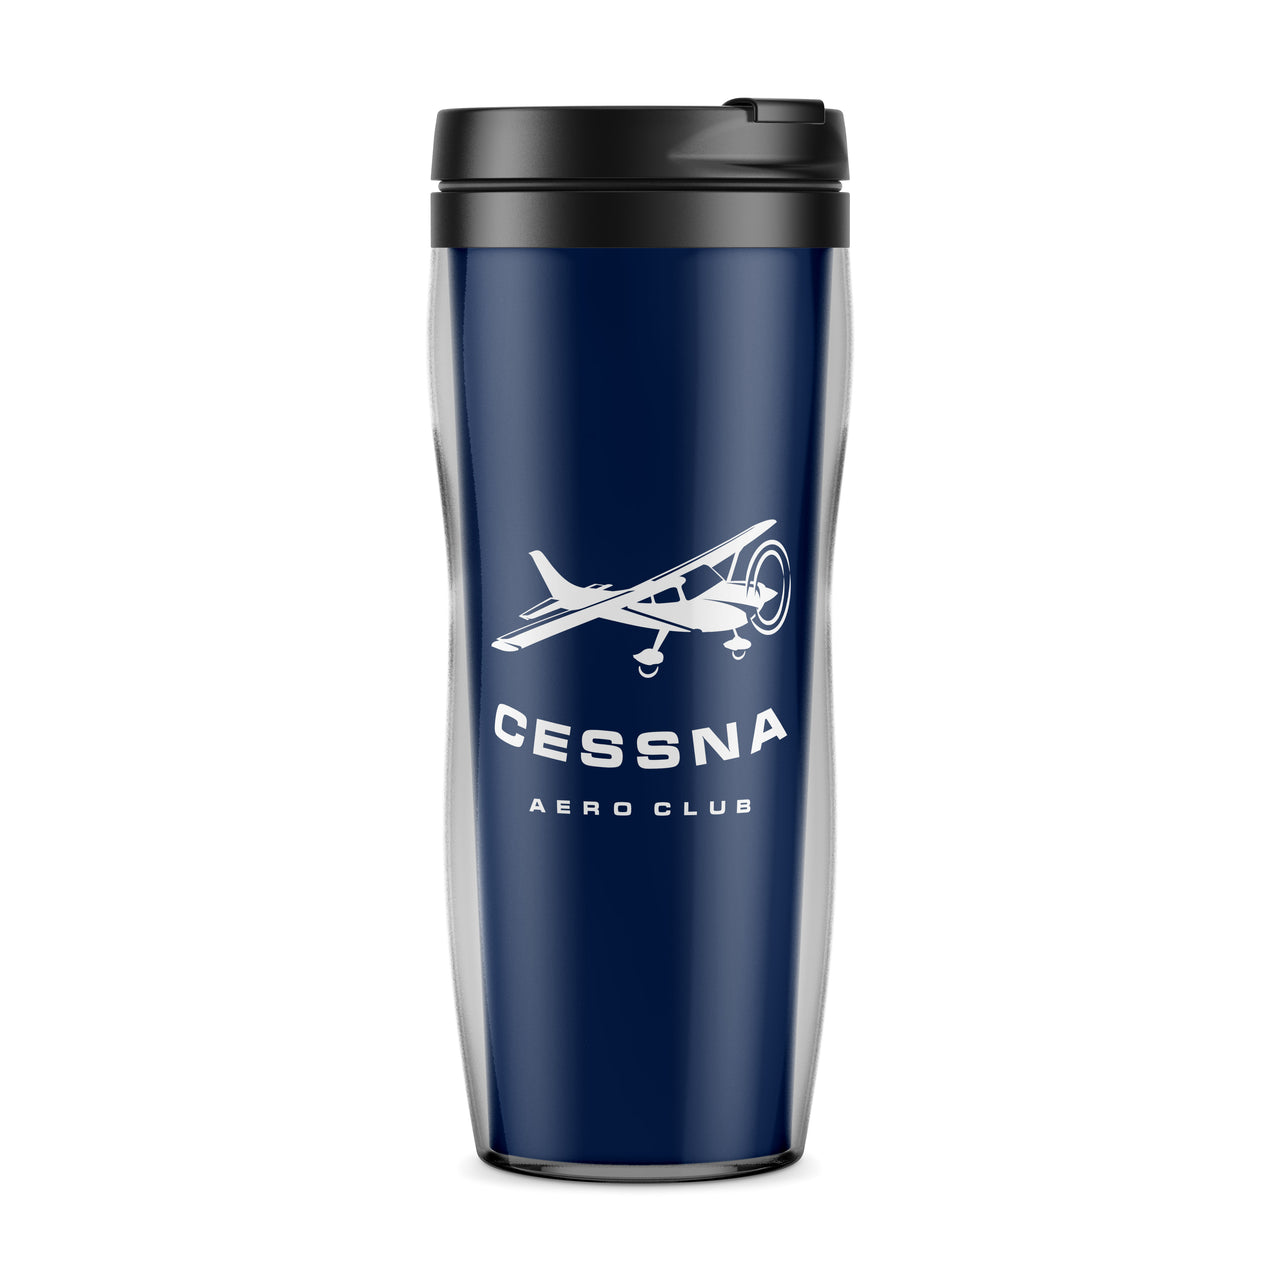 Cessna Aeroclub Designed Travel Mugs